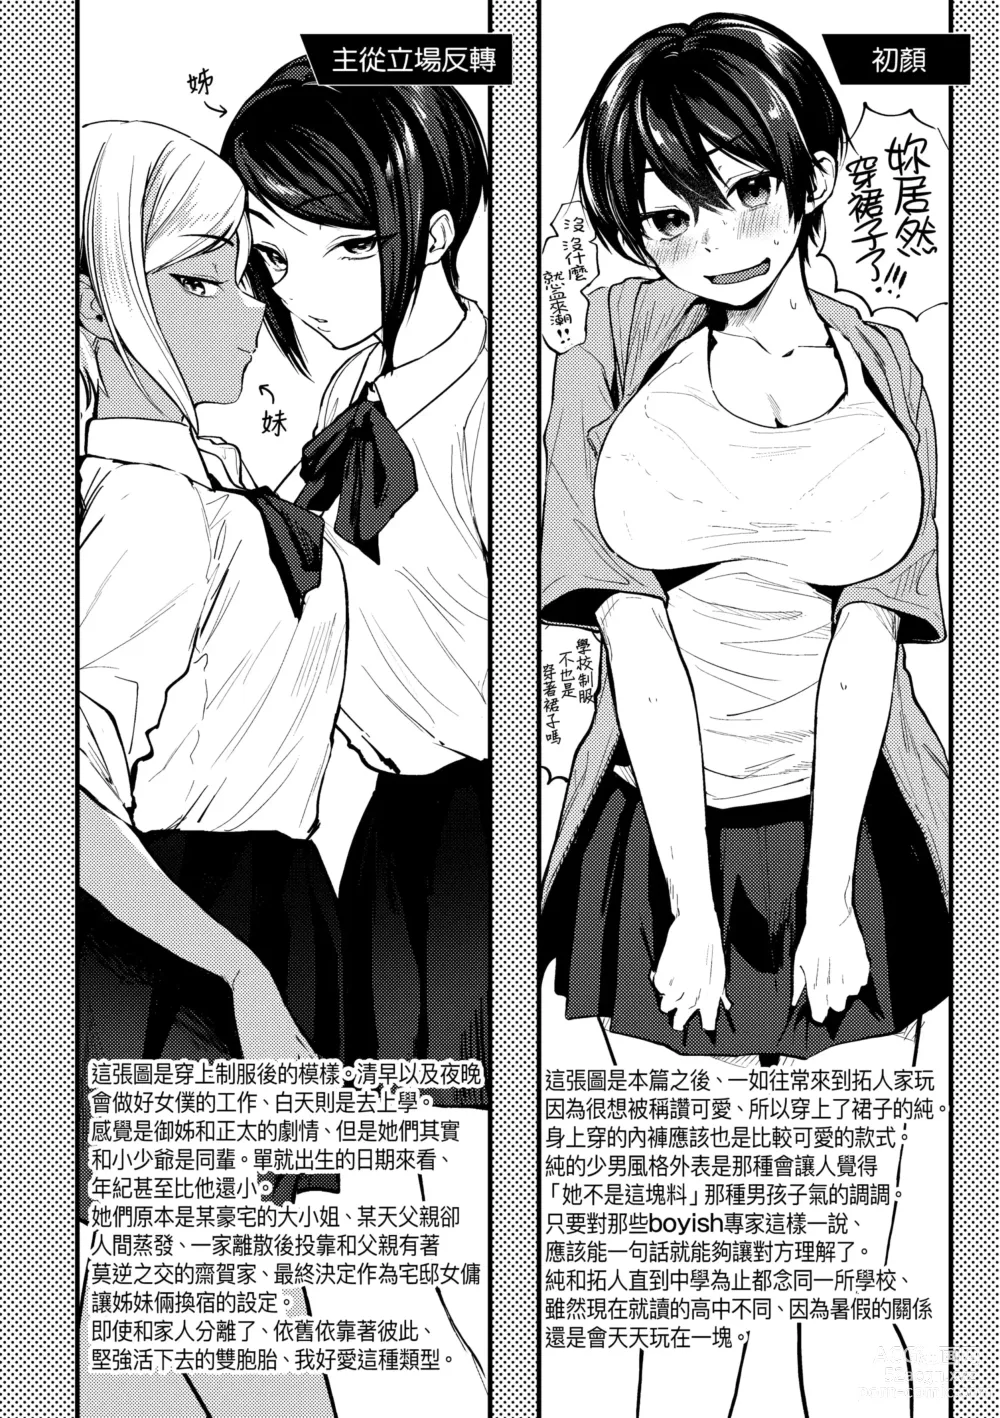 Page 228 of manga 同人作家夢想著能夠角色扮演SEX 特裝版 (decensored)